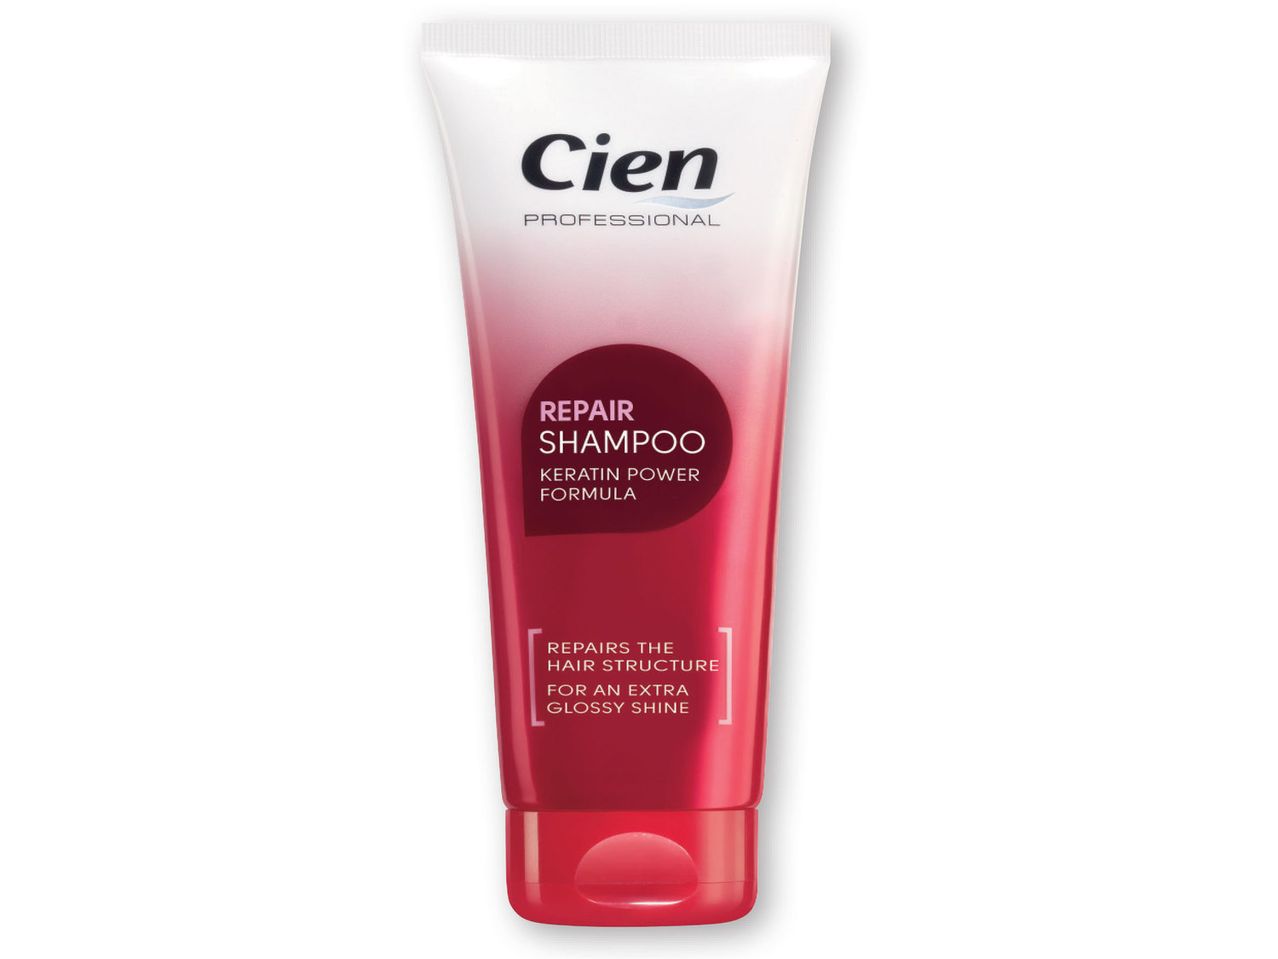 Go to full screen view: CIEN PROFESSIONAL Repair Shampoo - Image 1